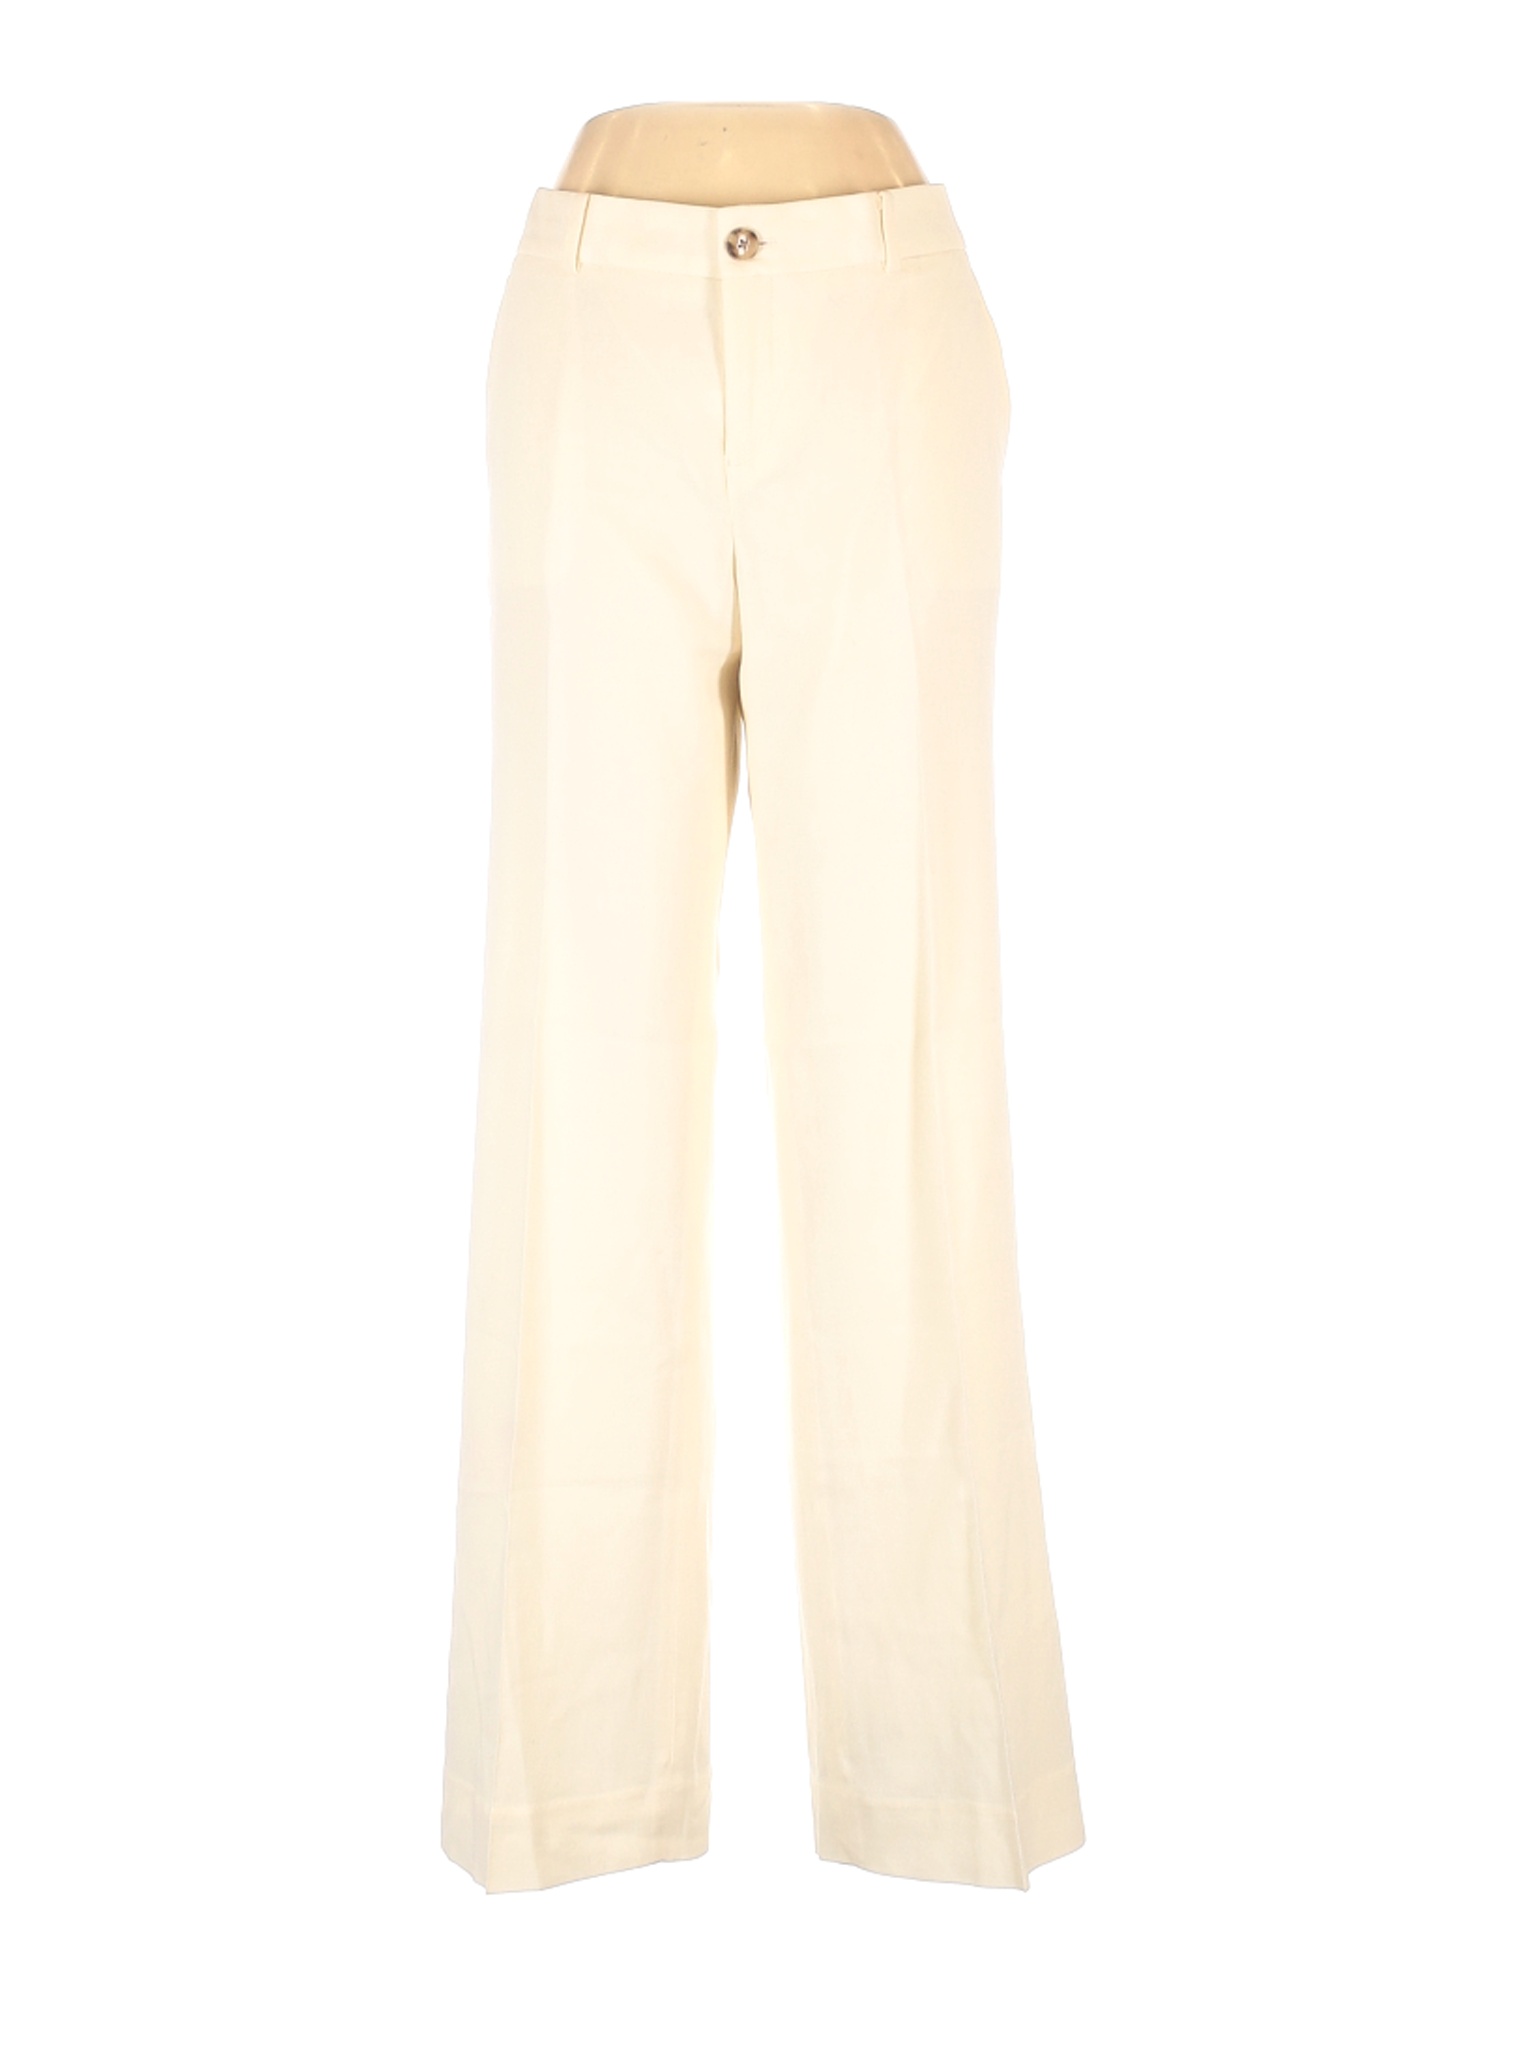 Banana Republic Women Ivory Dress Pants 8 | eBay